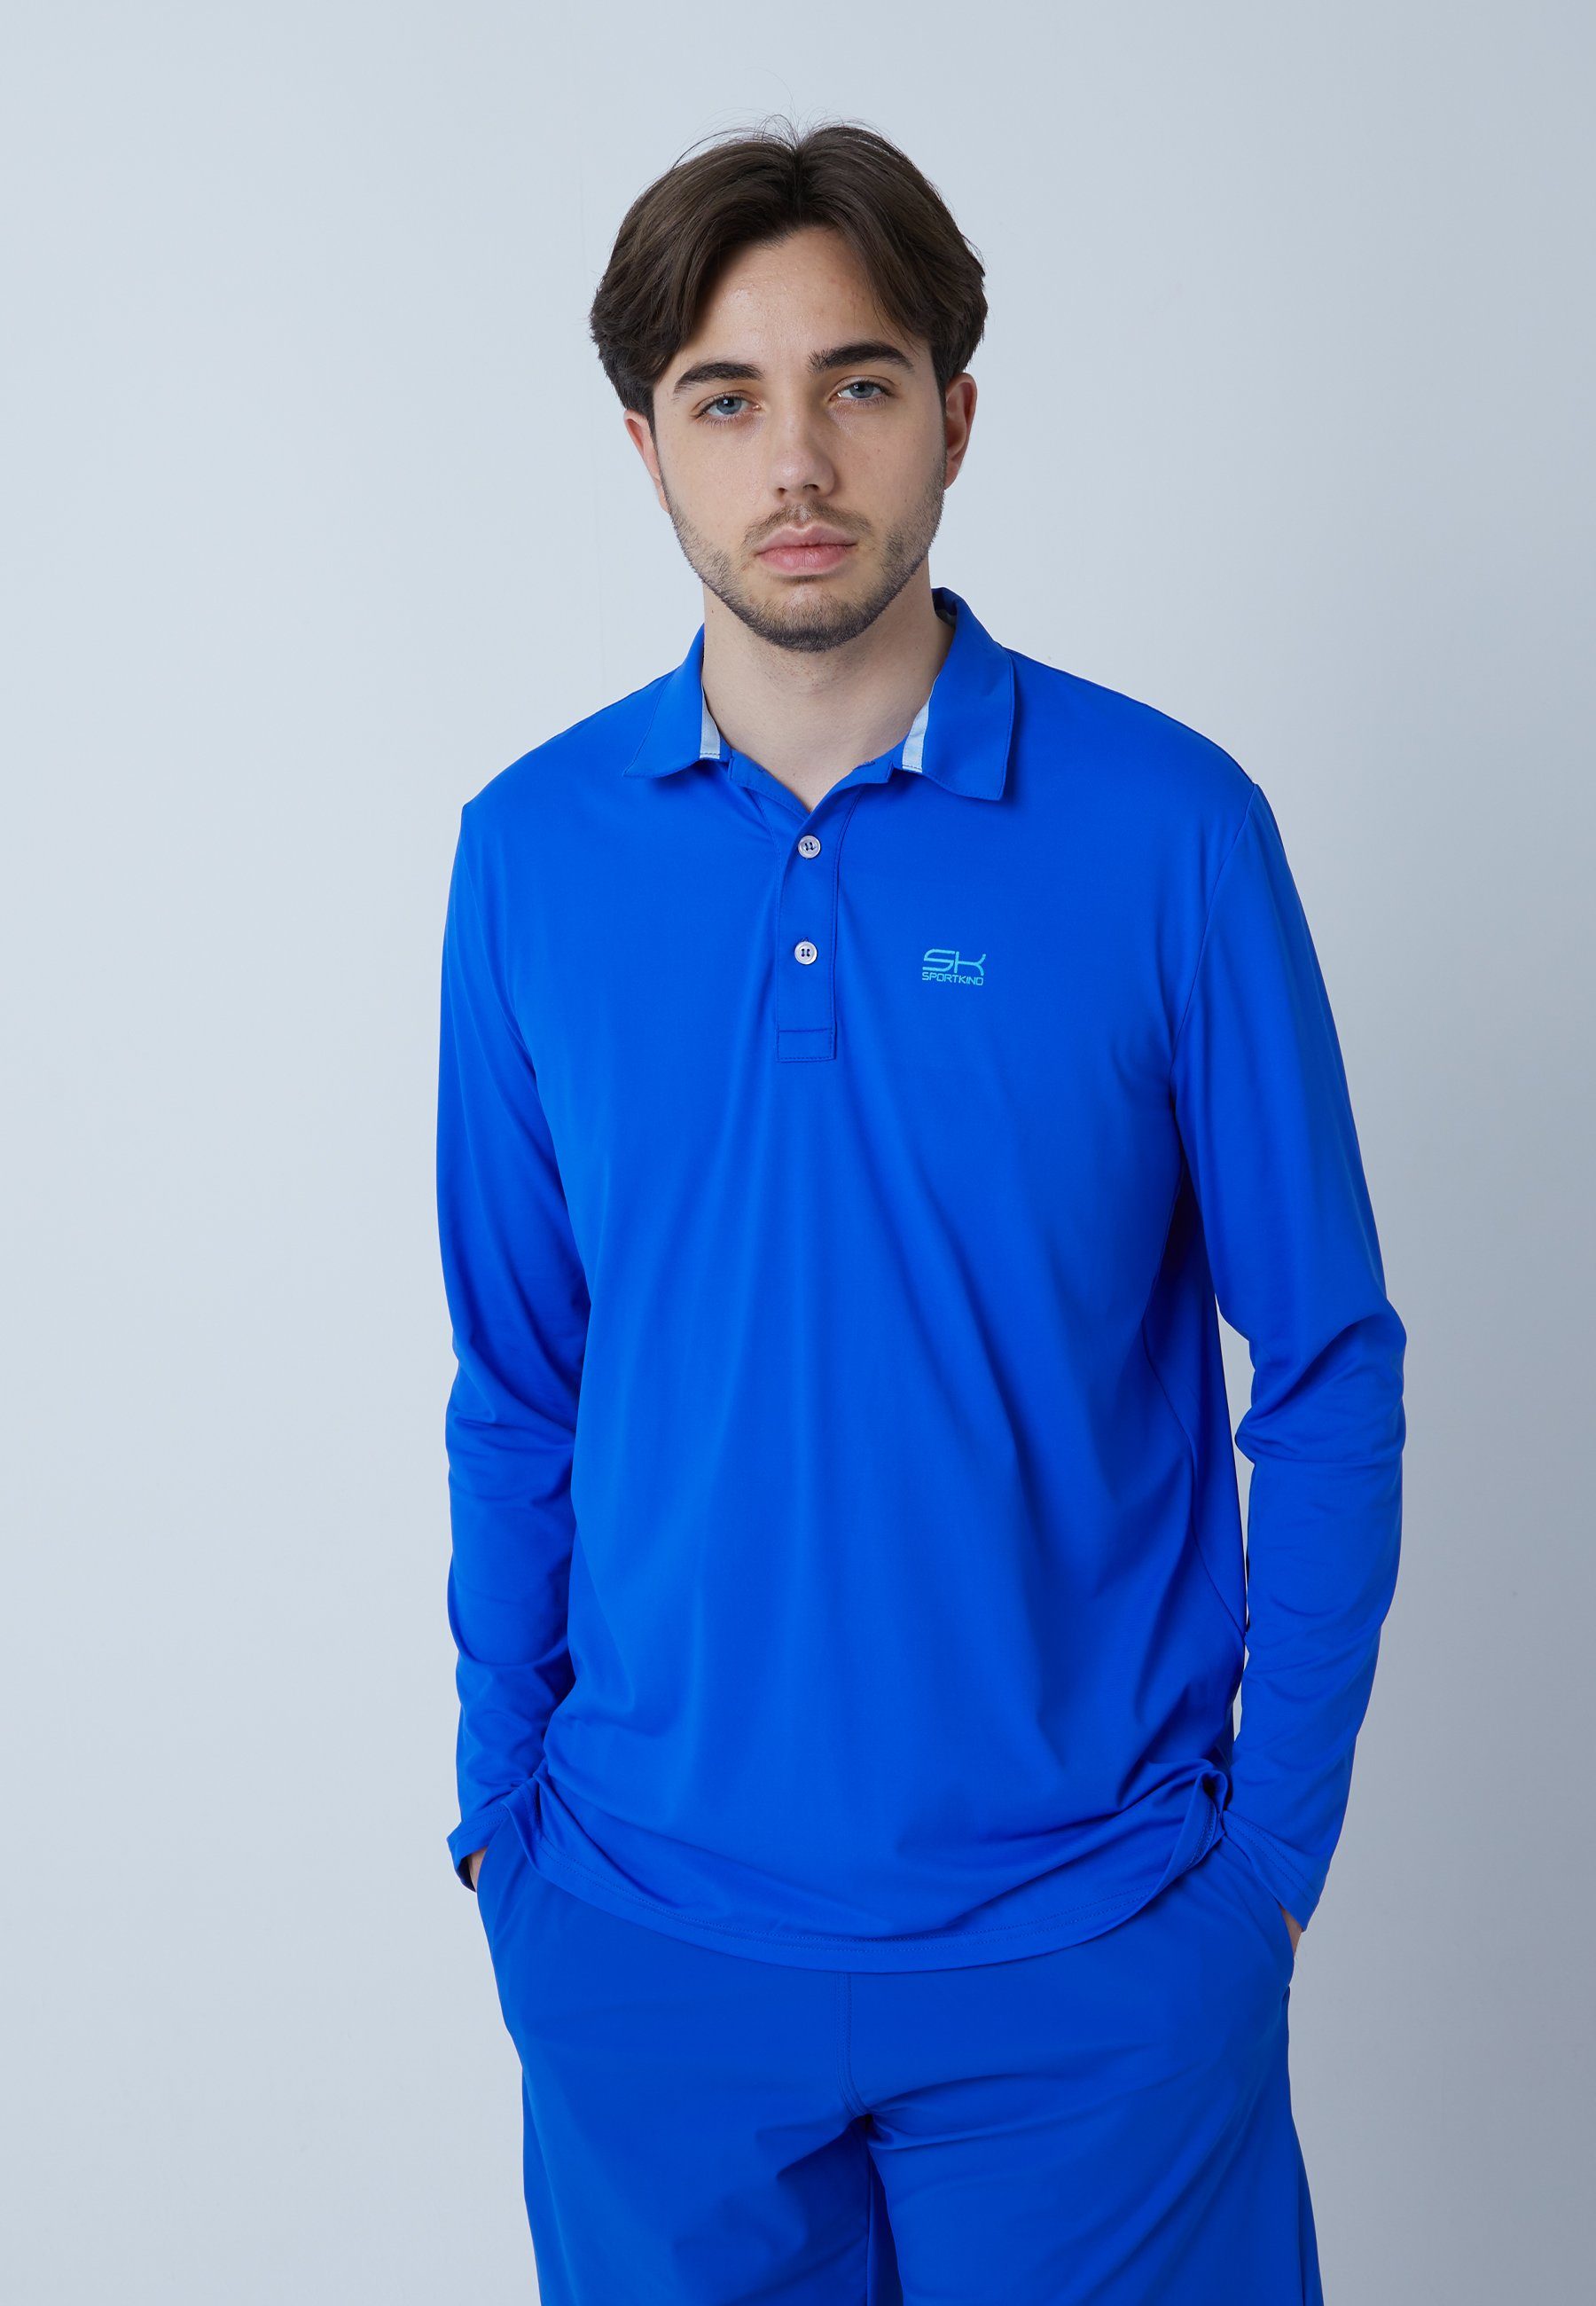 Jungen Golf & kobaltblau SPORTKIND Herren Langarm Shirt Polo Funktionsshirt